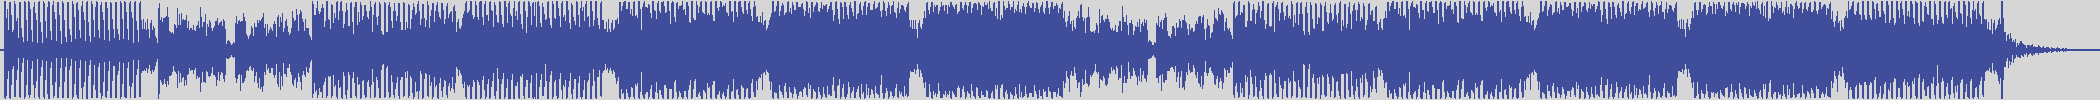 nf_boyz_records [NFY047] Yoka Doda - Push Me Love Me [Original Mix] audio wave form